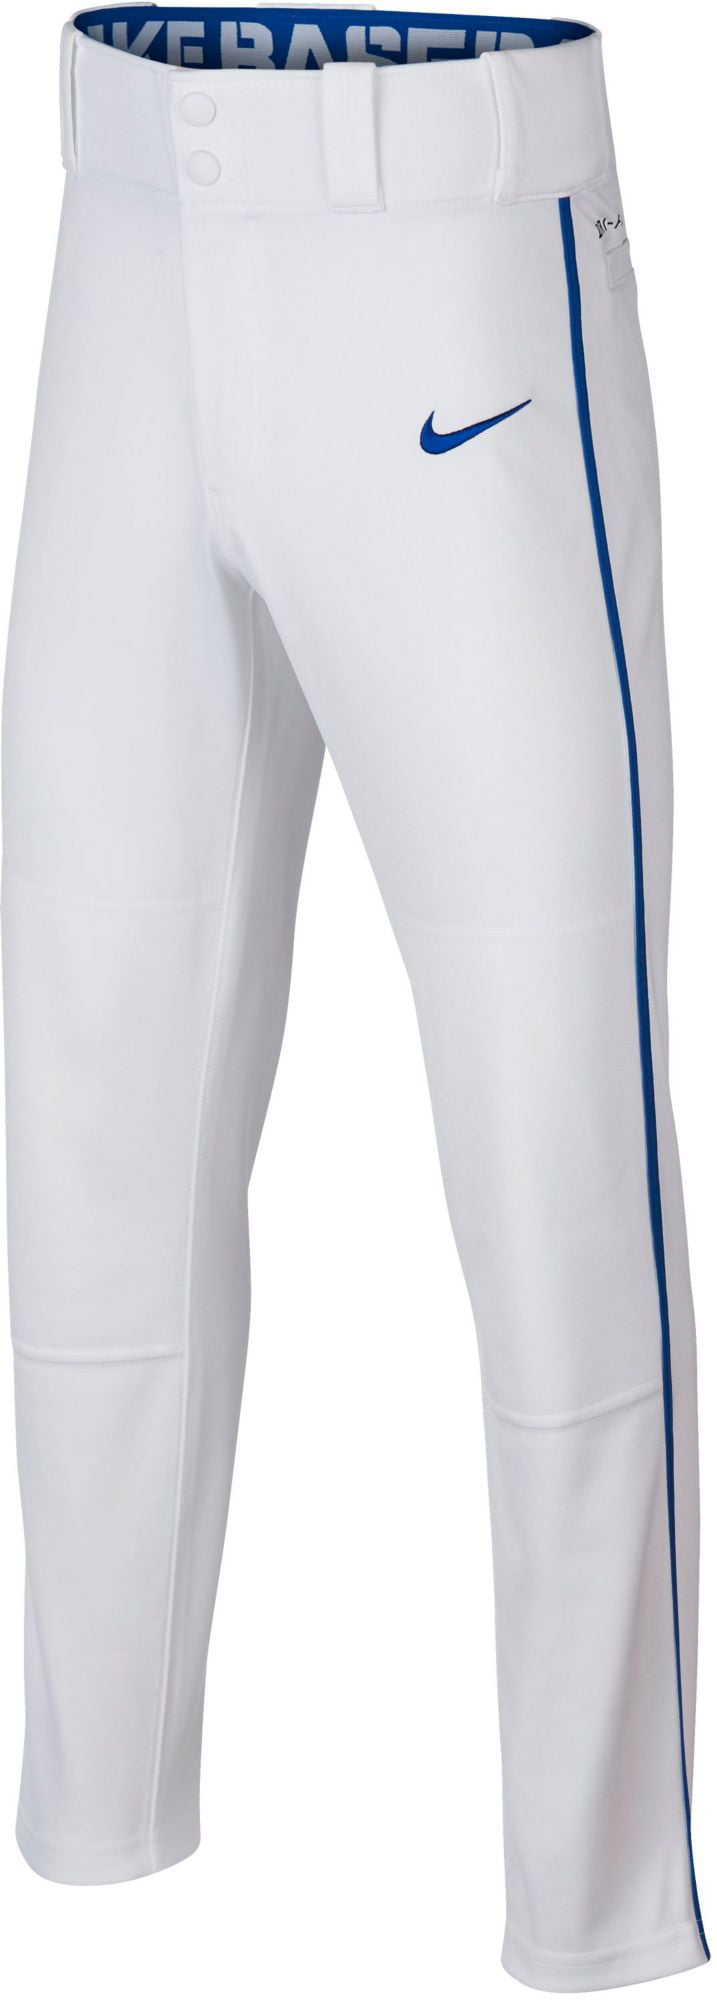 Download Nike Boys' Swoosh Piped Dri-FIT Baseball Pants - Walmart ...